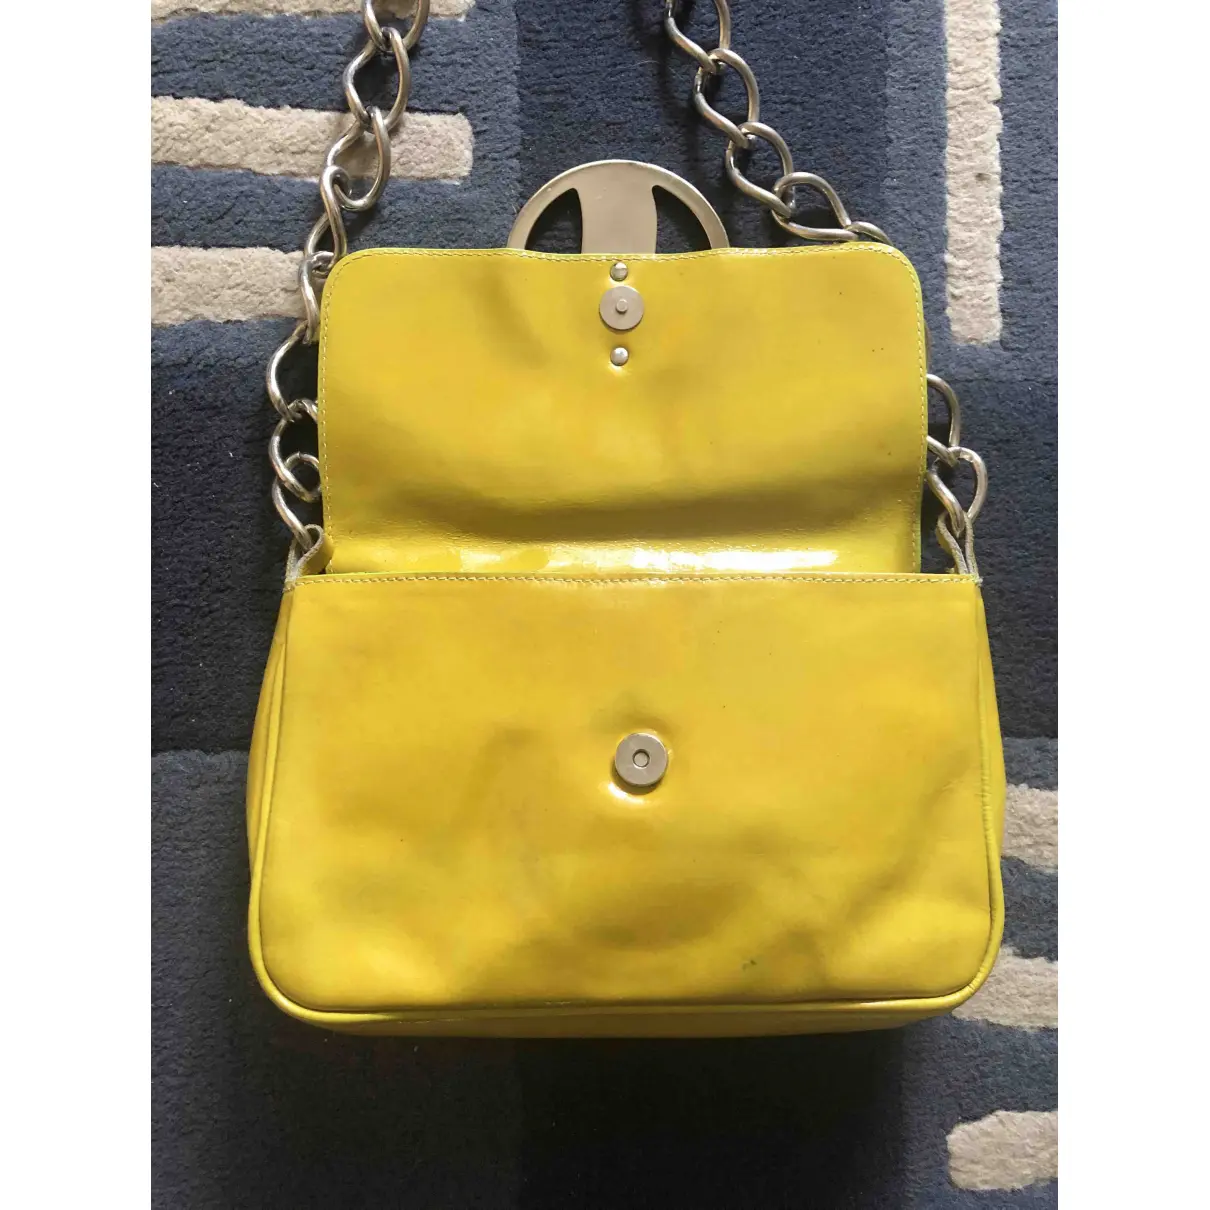 Patent leather handbag Orciani